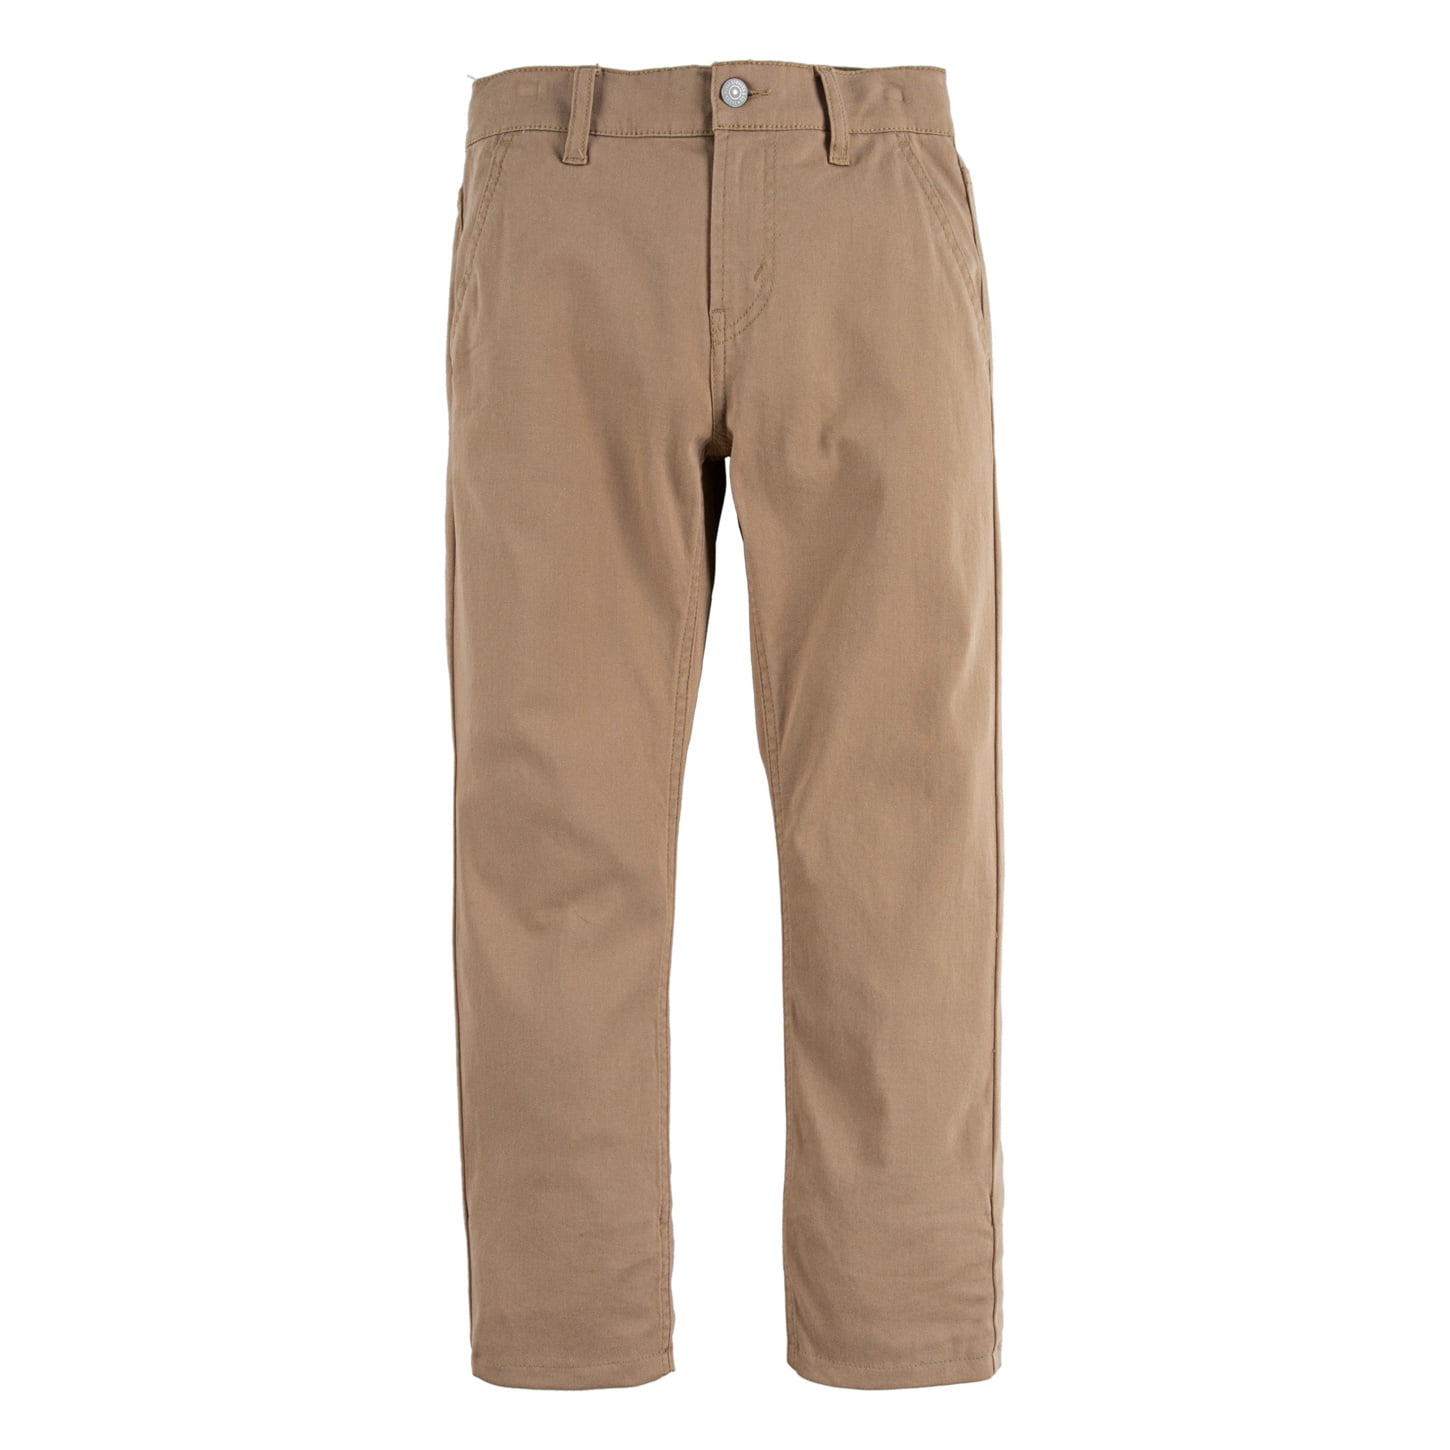 Levi's Boys 502 Regular Fit Chino Pants, Sizes 4-20 